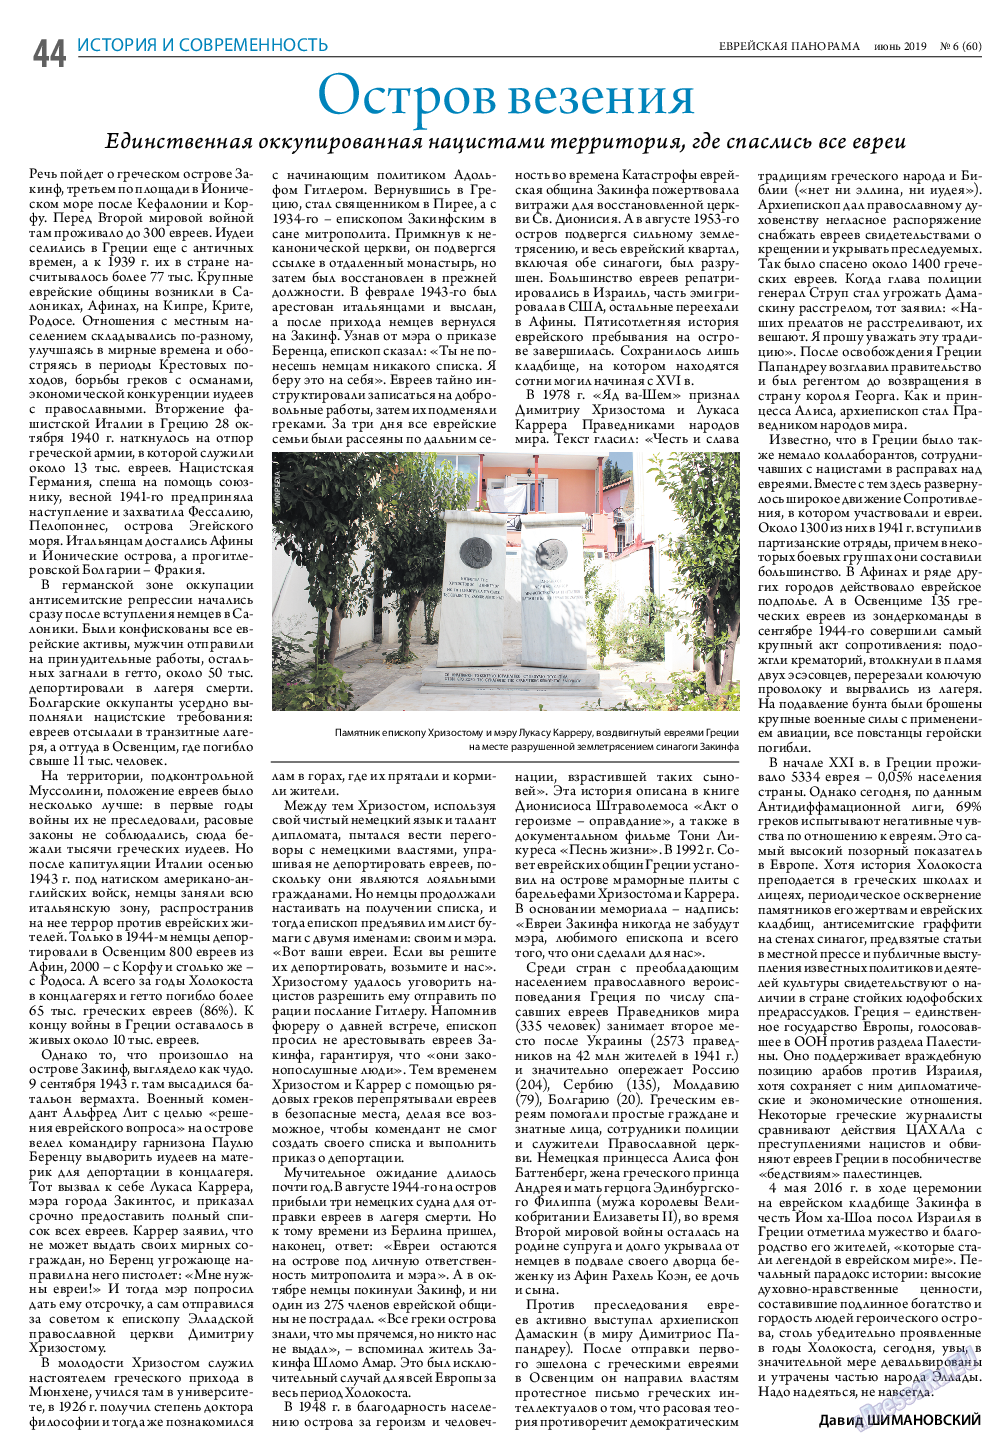 Еврейская панорама, газета. 2019 №6 стр.44